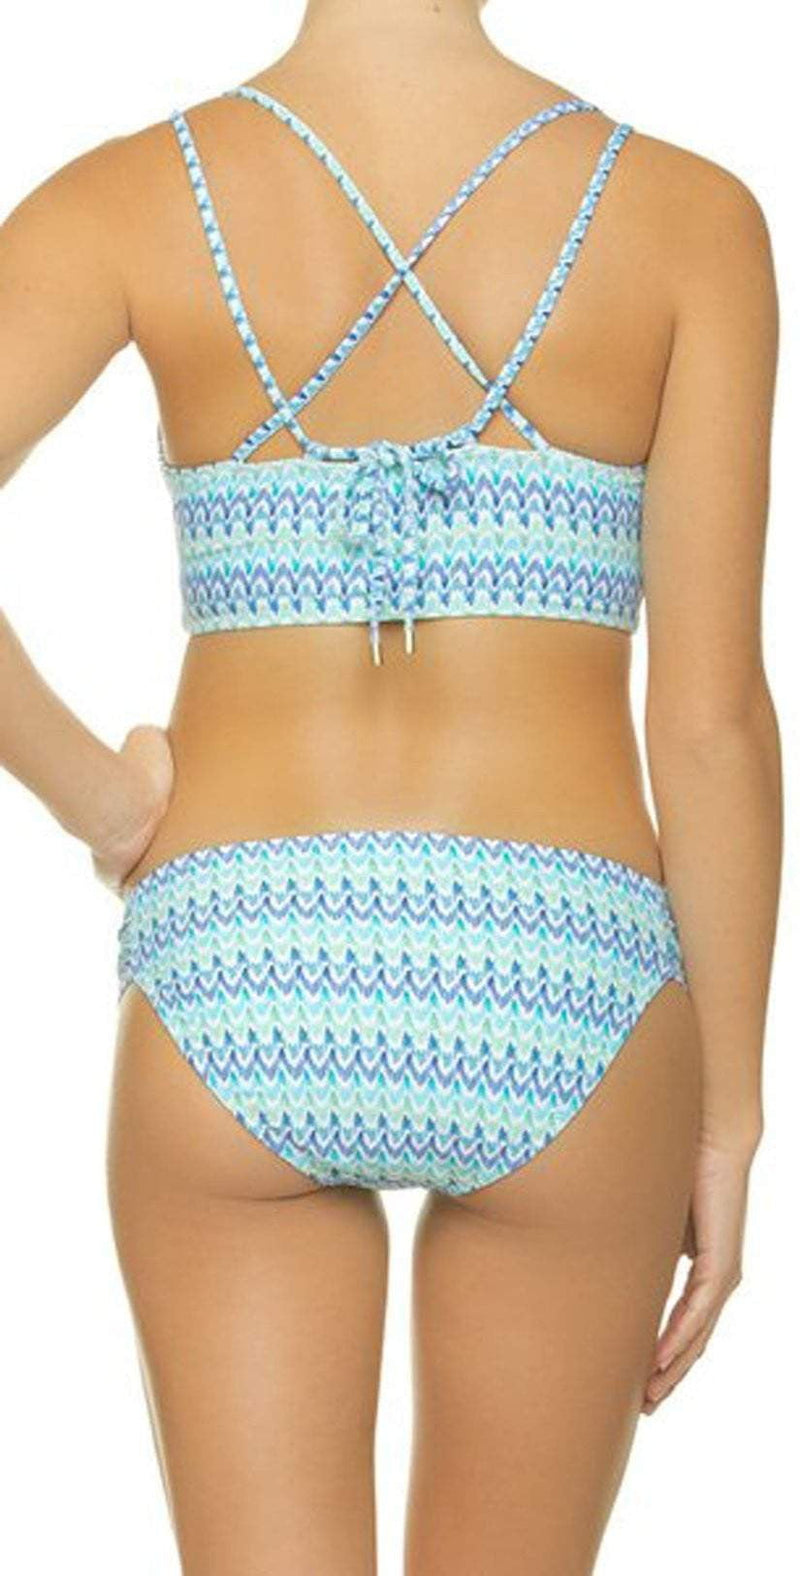 South Beach Swimsuits Helen Jon Beachcomber Retreat Bra Bikini - Blue -  Free Shipping! – South Beach Swimsuits